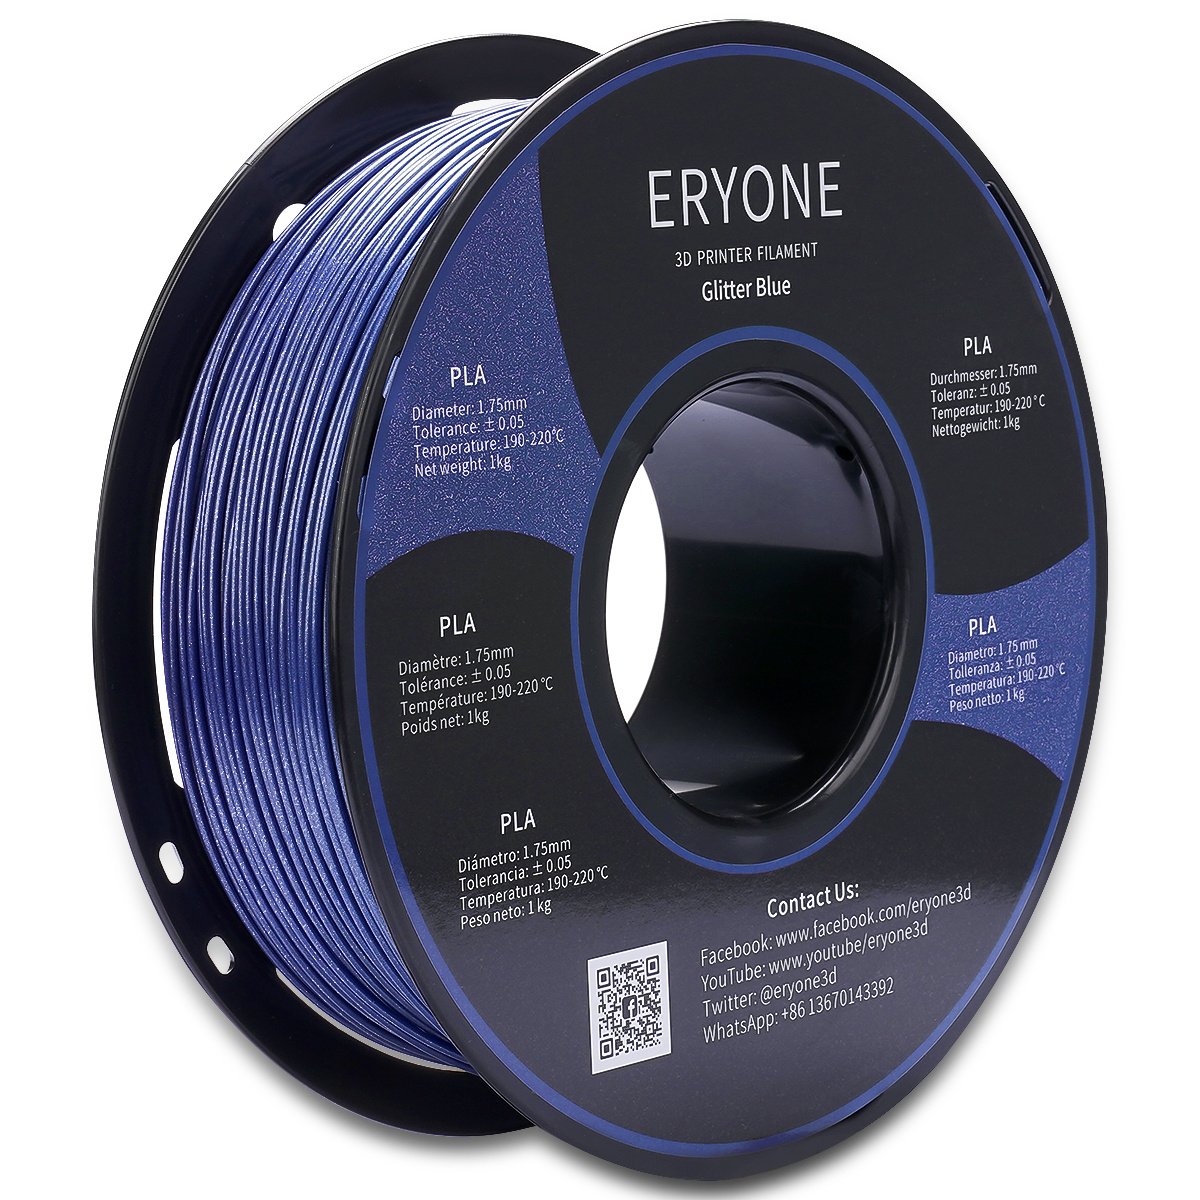 ERYONE Galaxy Sparkly Glitter PLA 3D printer filament 1.75mm, dimensional accuracy +/- 0.05mm, 1kg (2.2LBS) / spool 